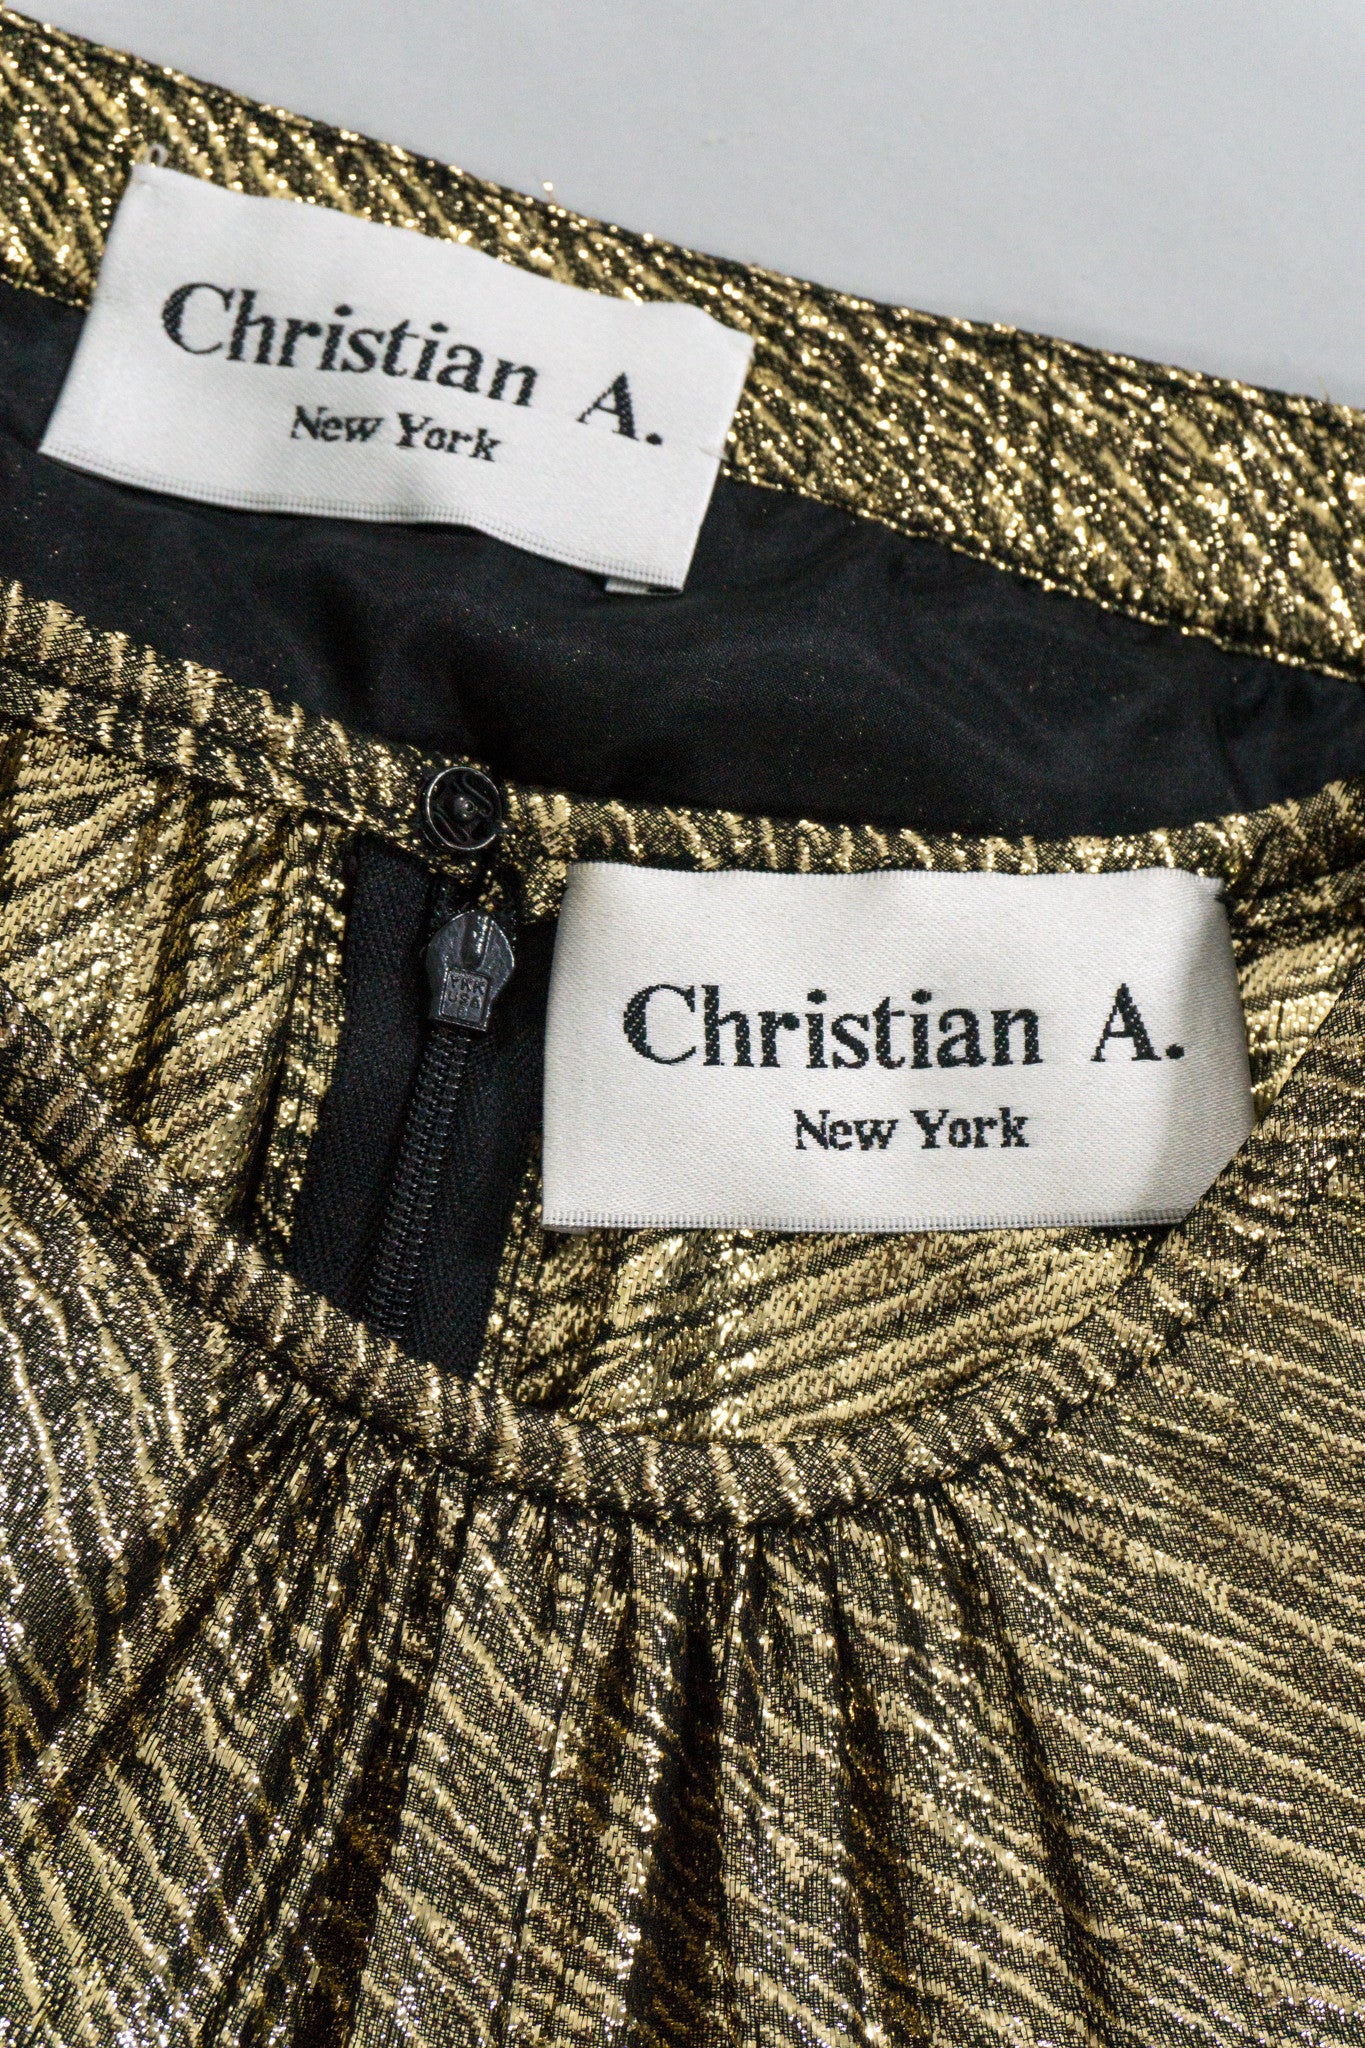 Christian A. Label